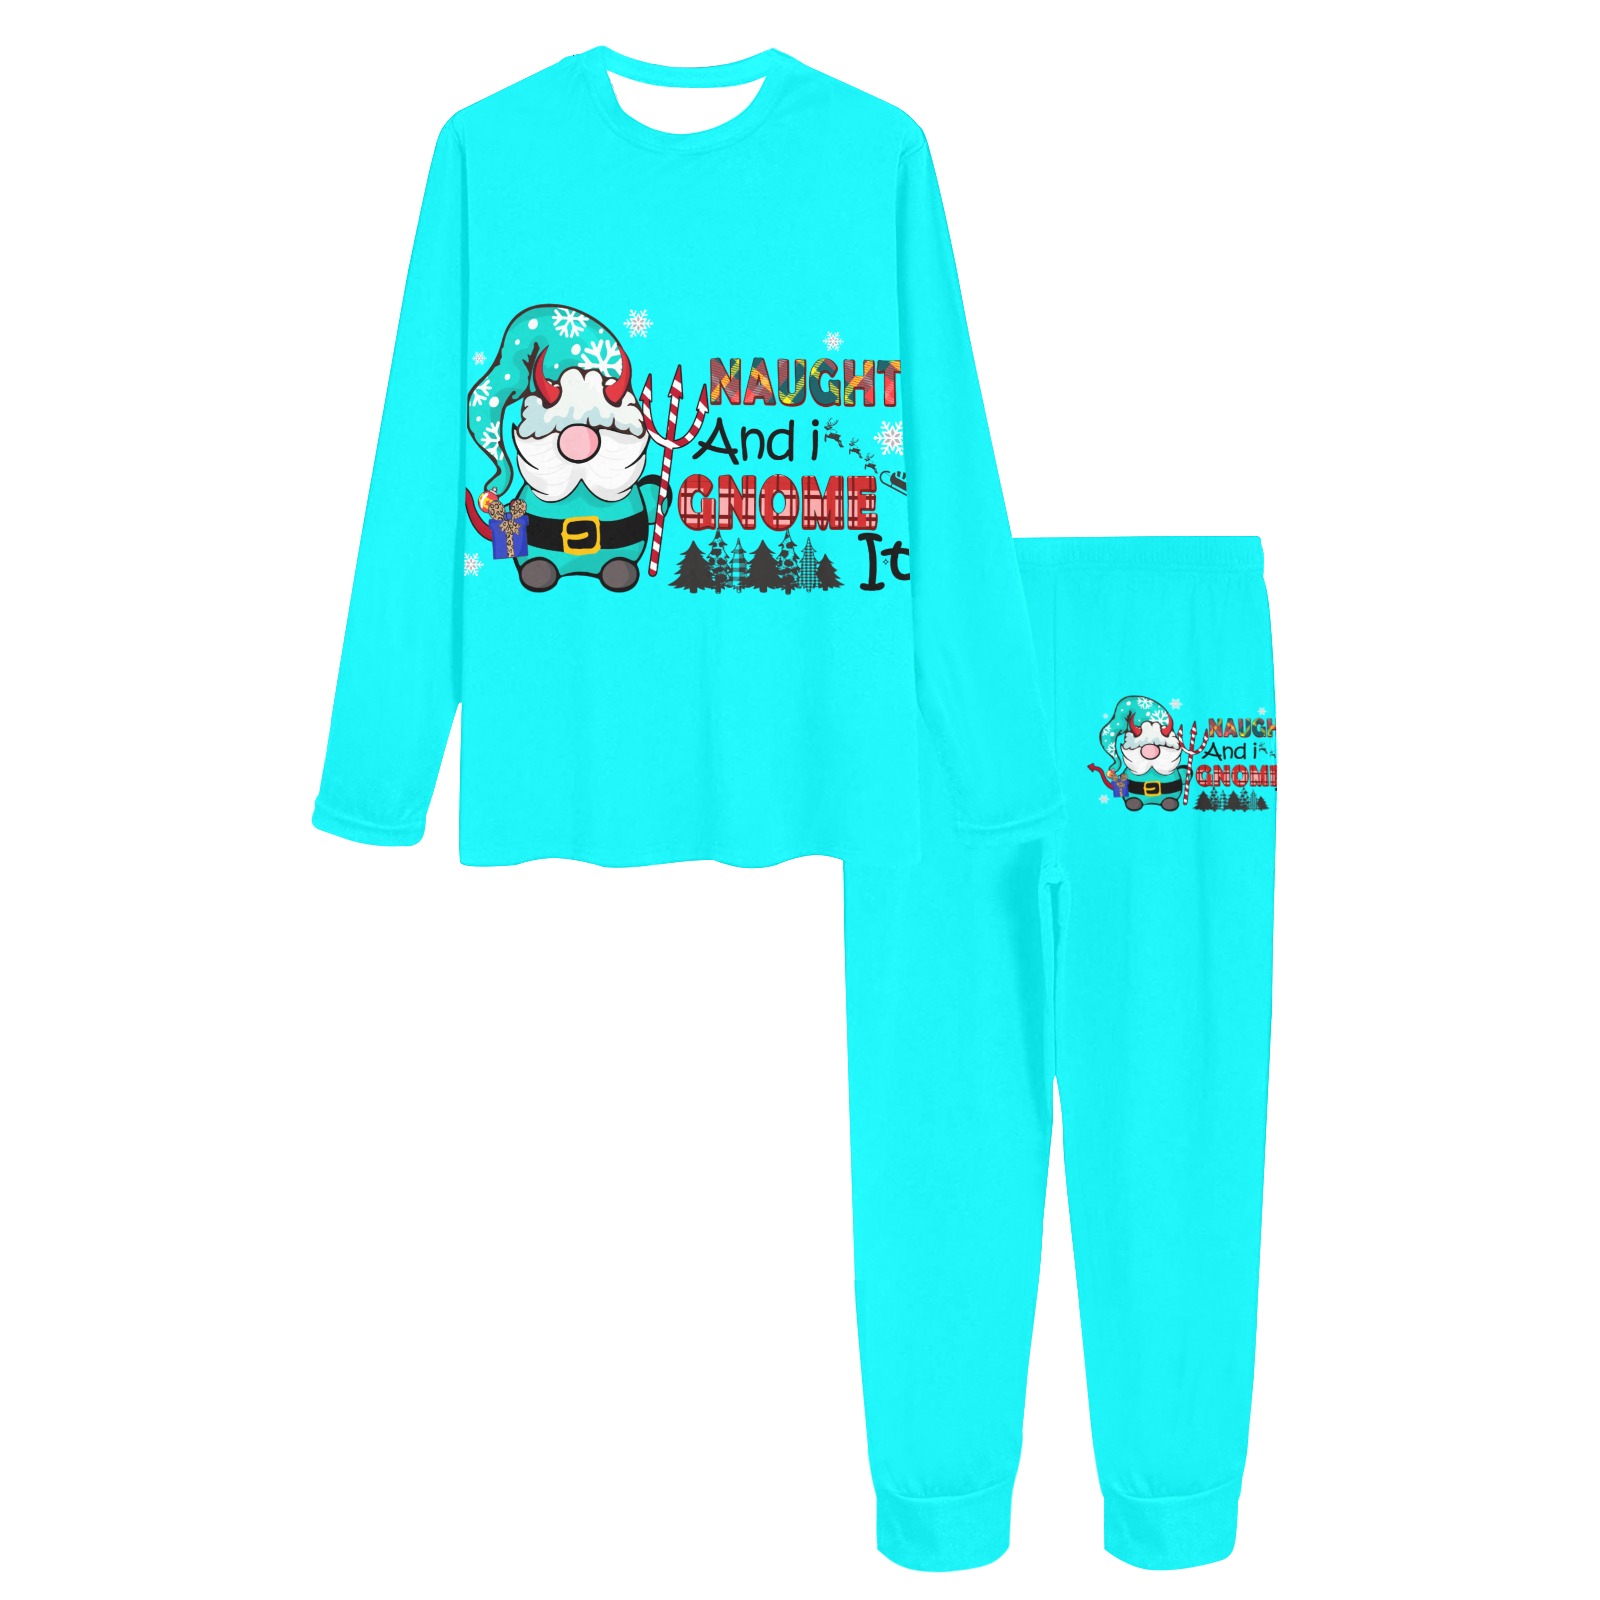 Naughty And I Gnome It (LB) Women's All Over Print Pajama Set